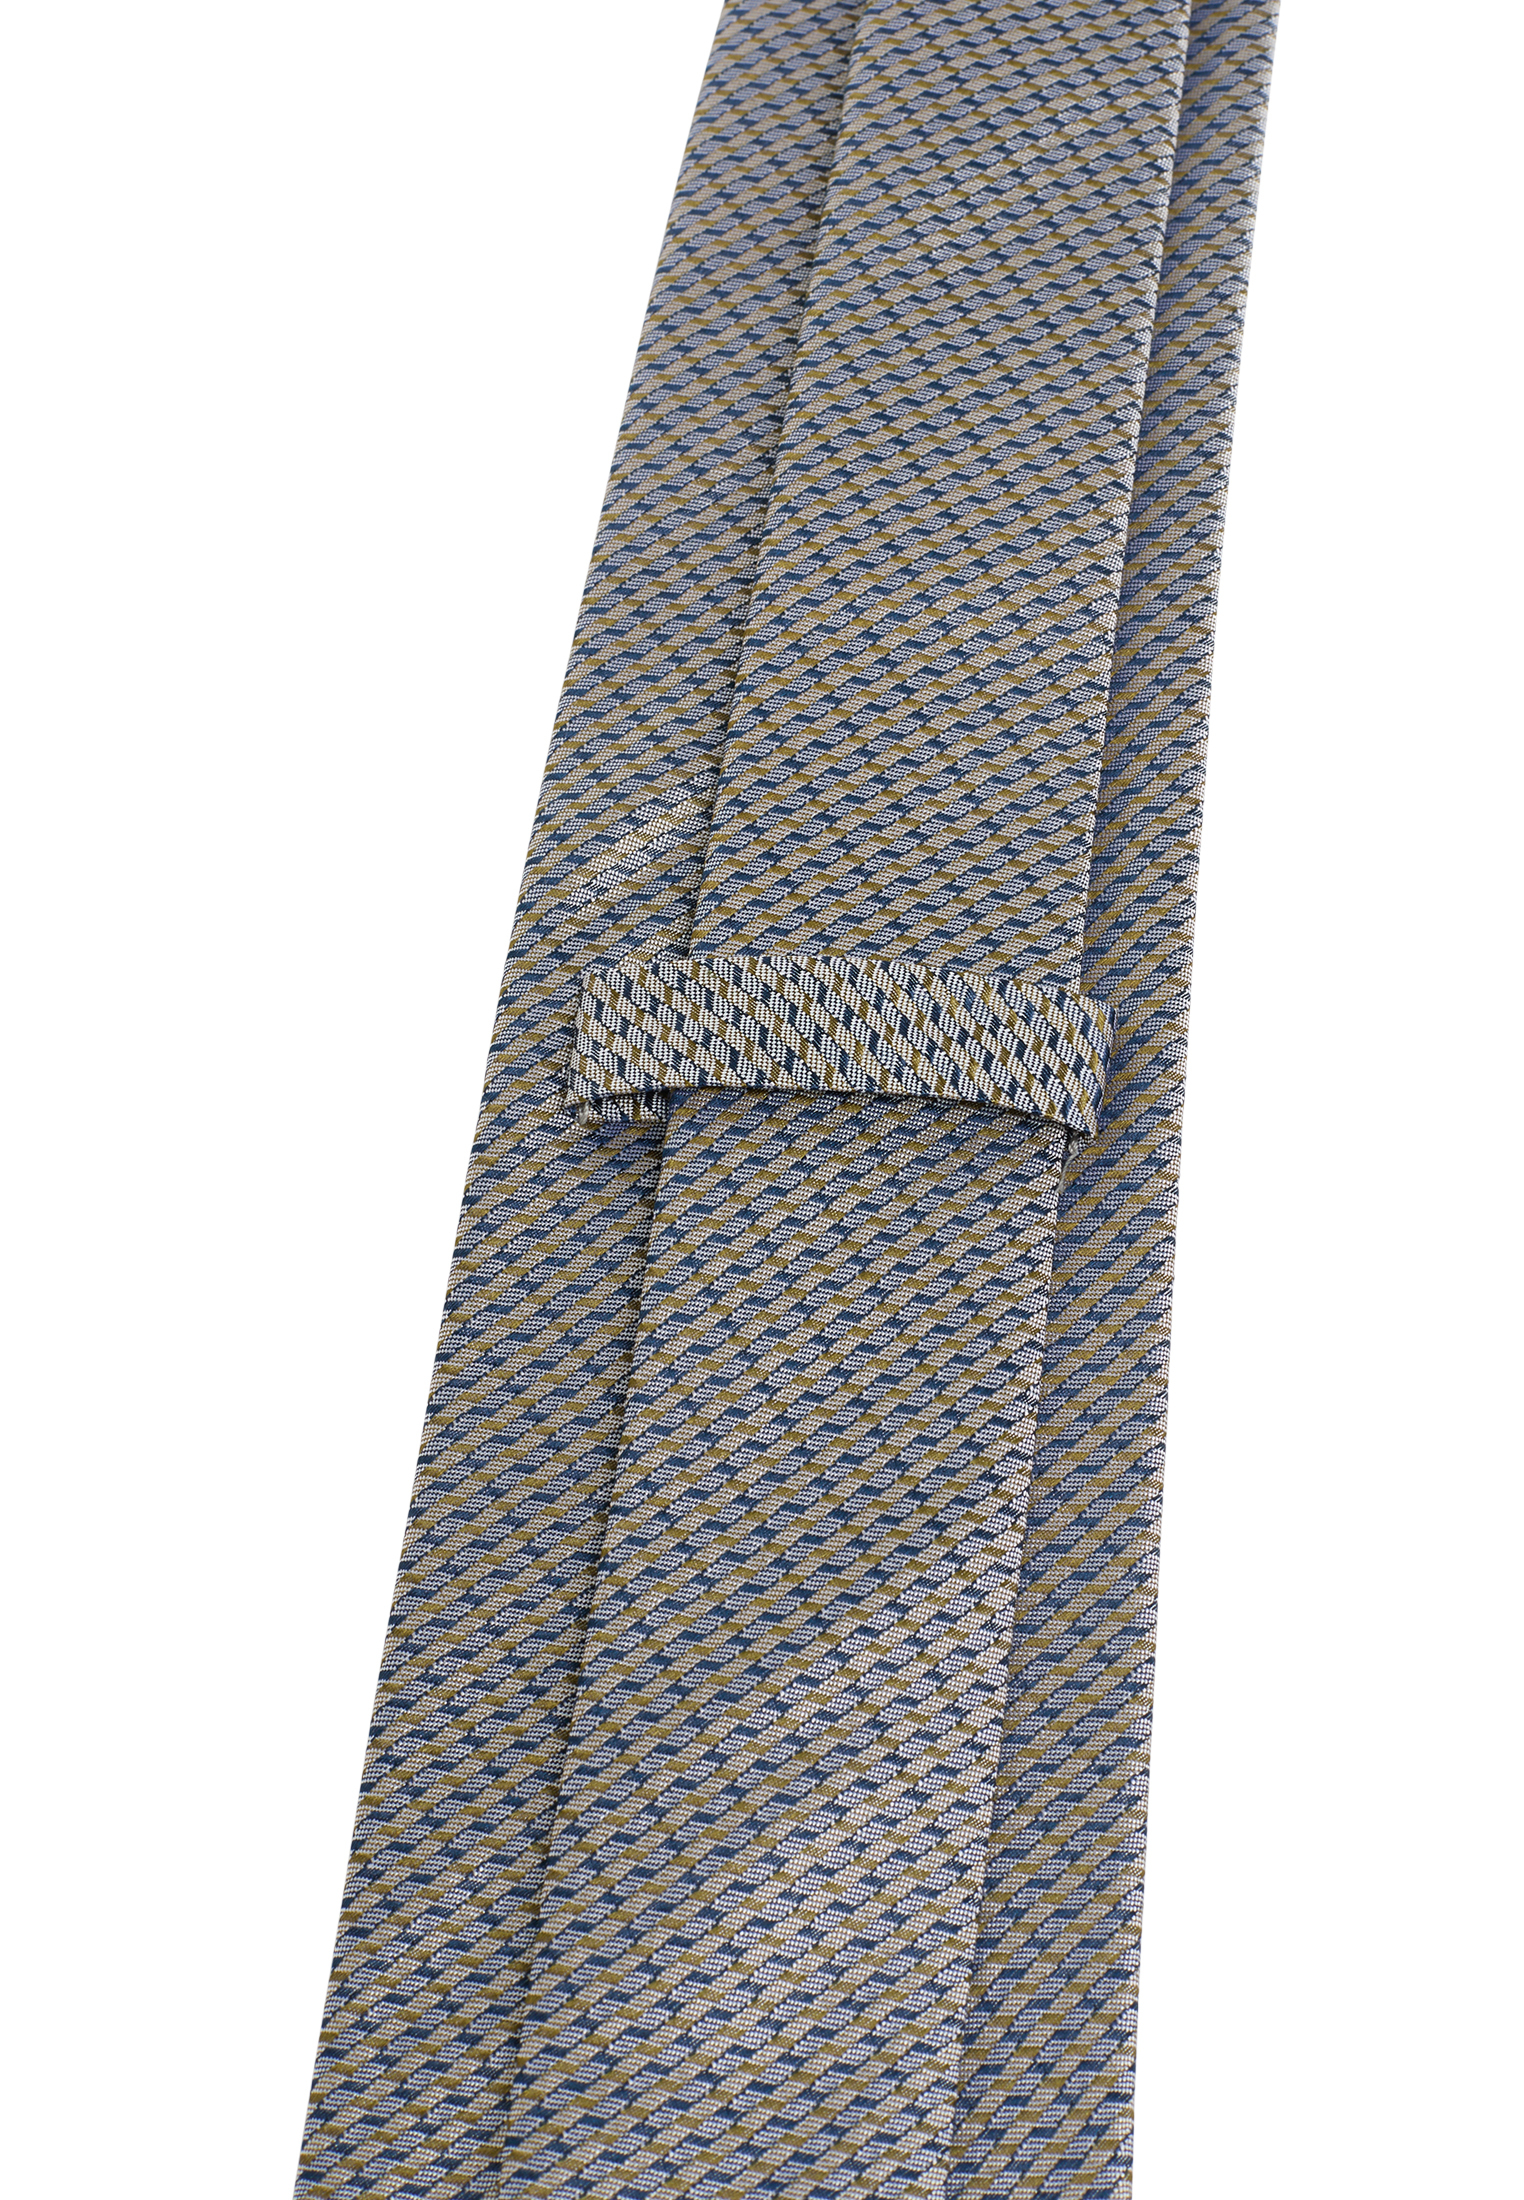 Cravate bleu marine/vert structuré